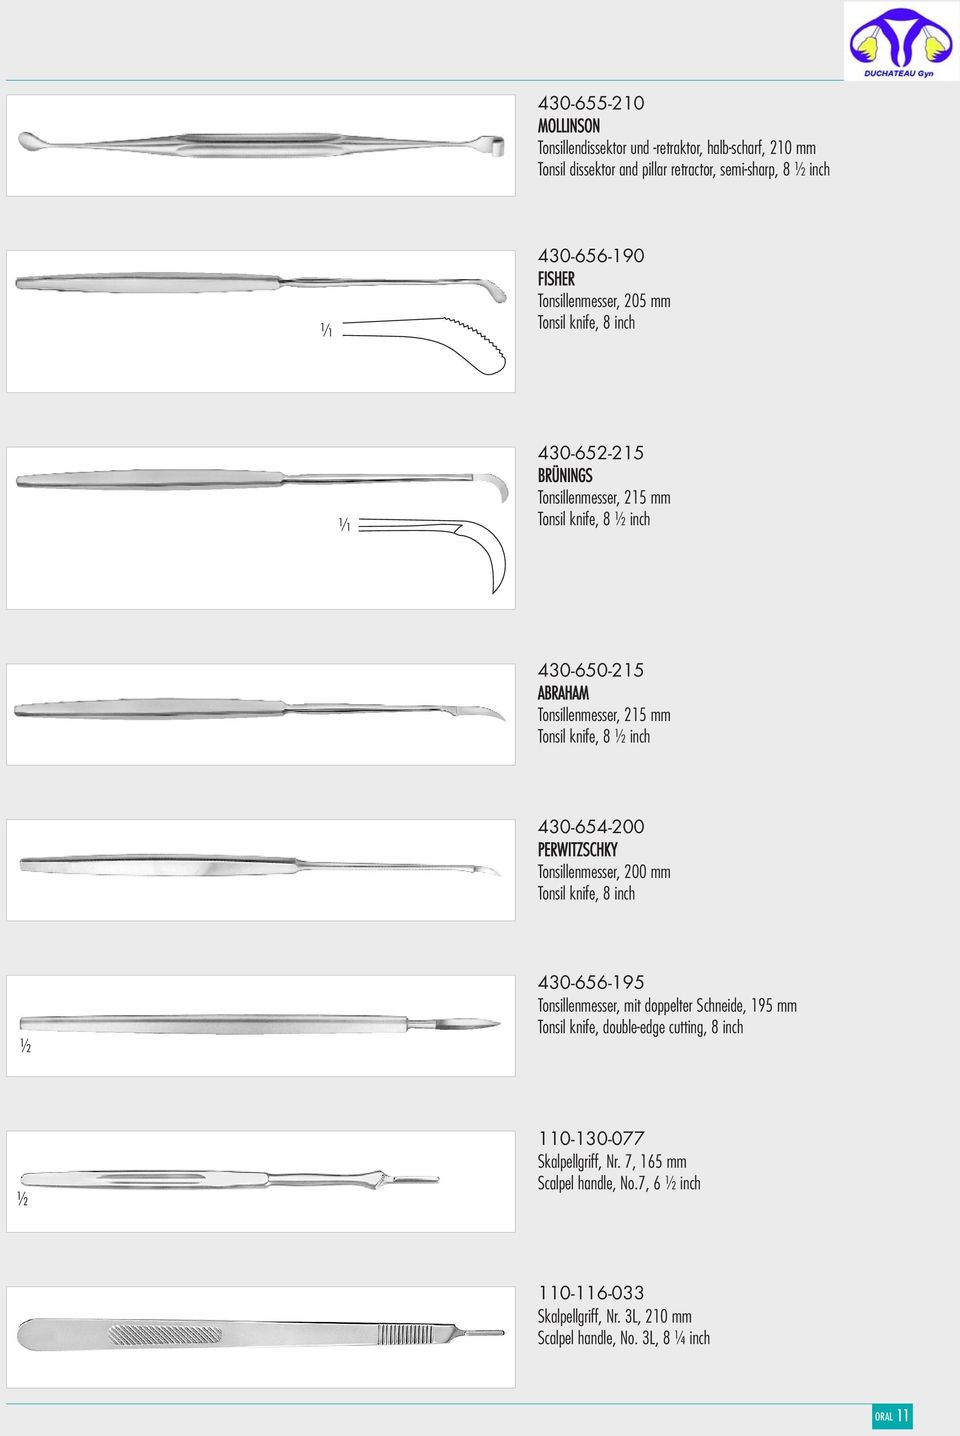 knife, 8 inch 430-654-200 PERWITZSCHKY Tonsillenmesser, 200 mm Tonsil knife, 8 inch 430-656-195 Tonsillenmesser, mit doppelter Schneide, 195 mm Tonsil knife,